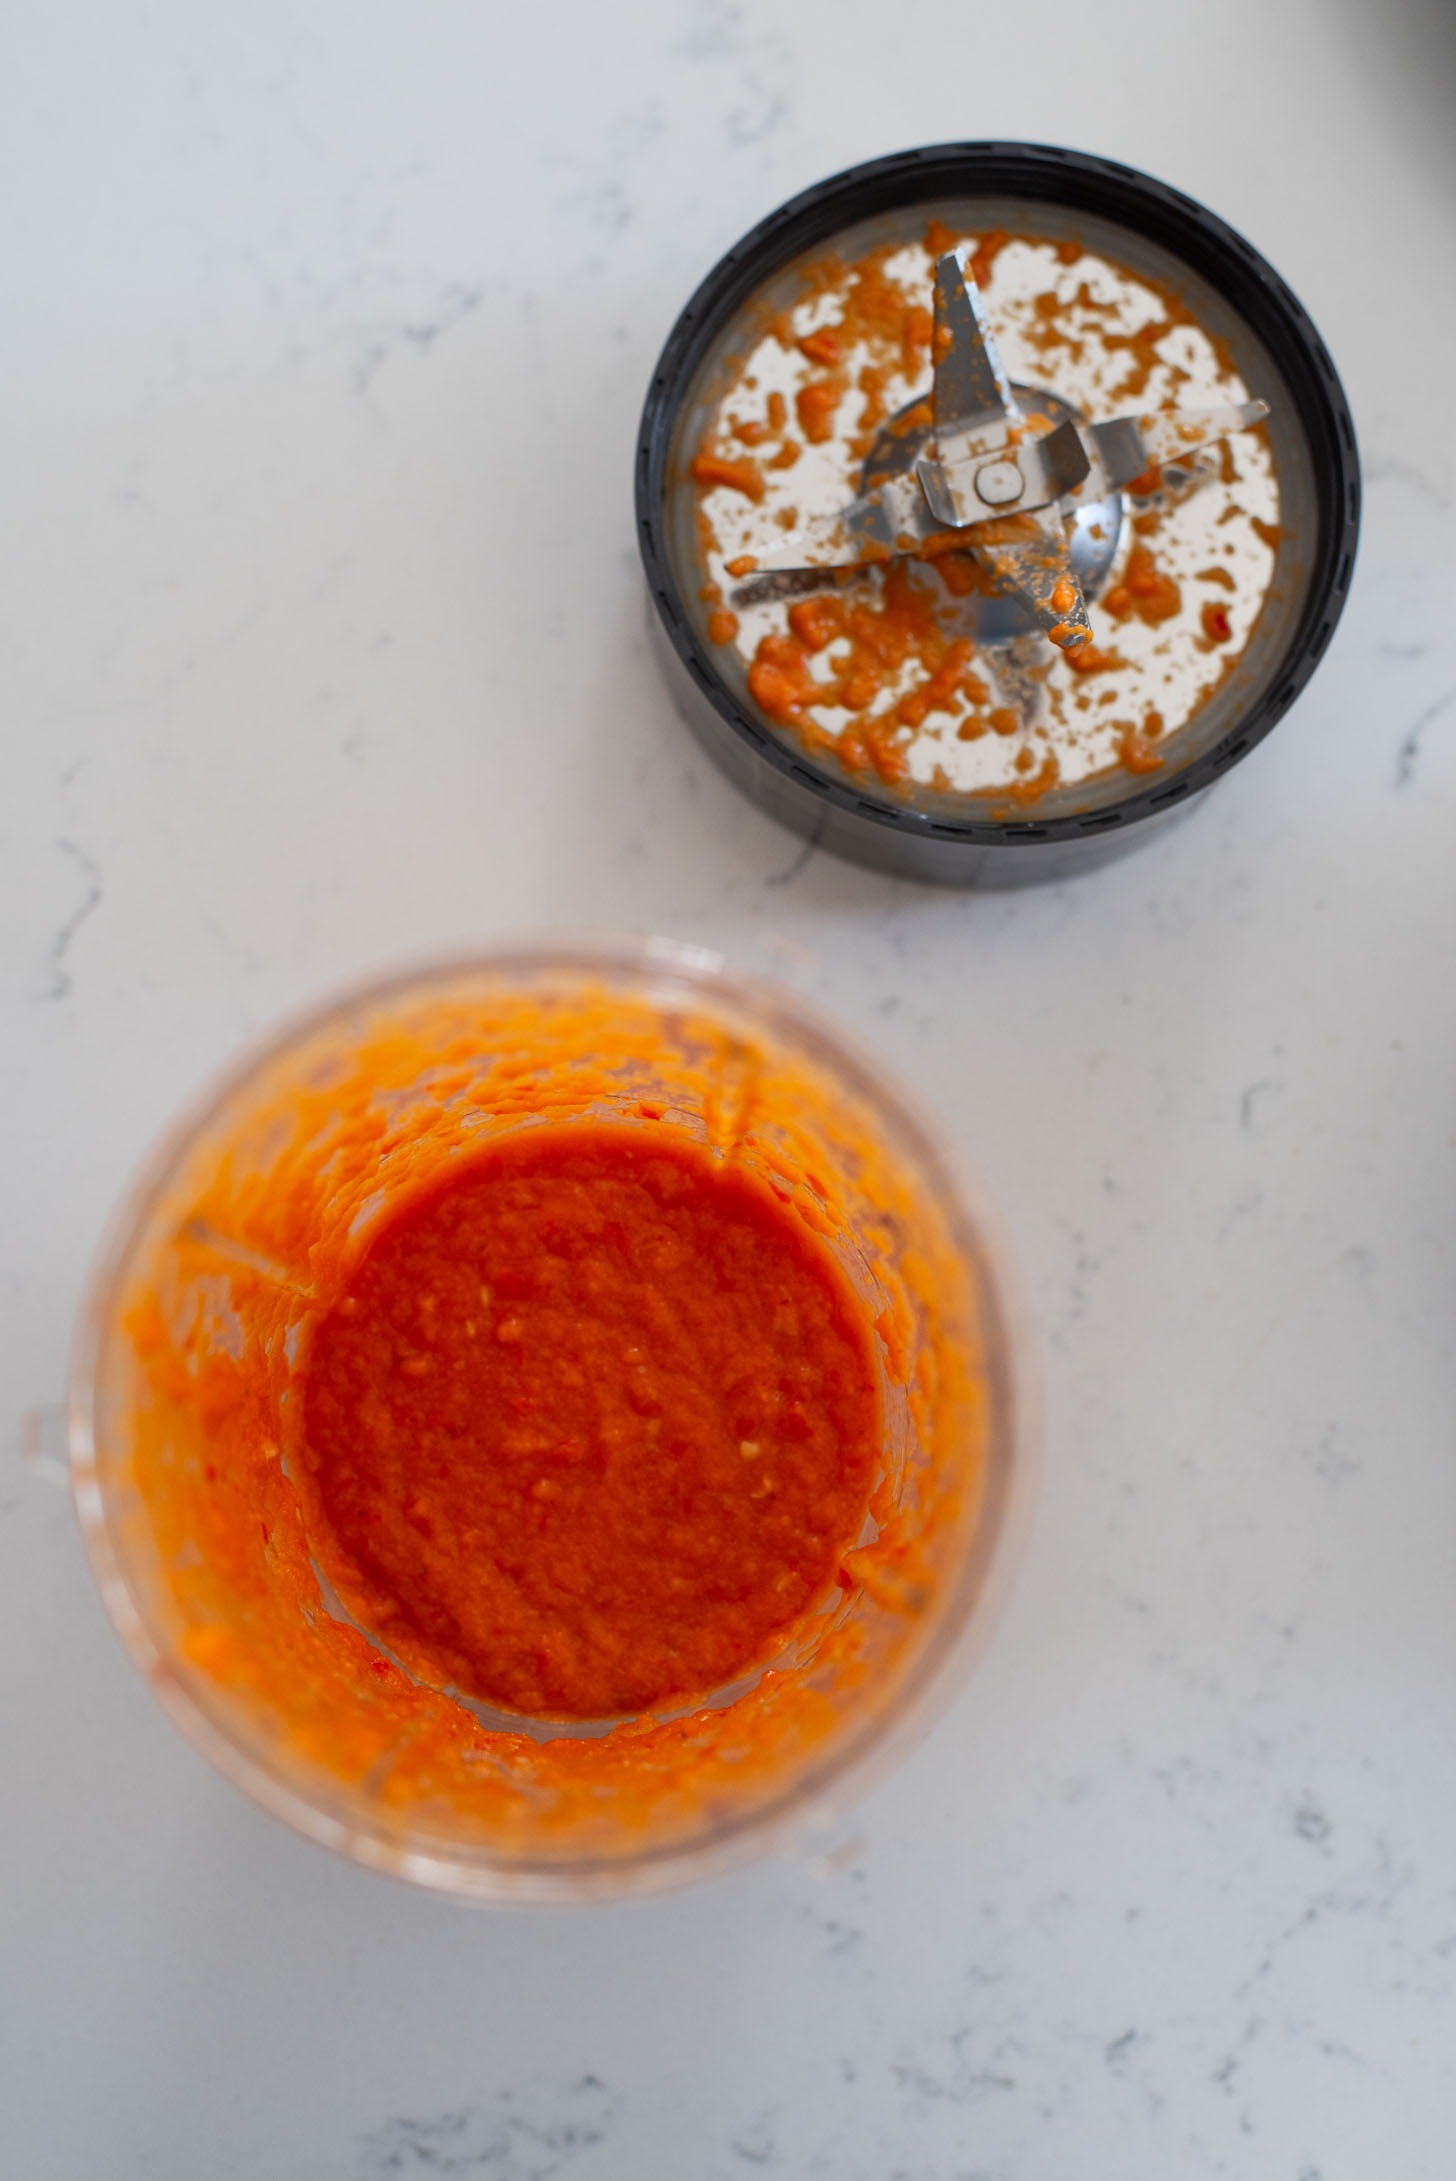 Chili, garlic, belachan, shallot are pureed in a mini food processor to make Nasi Goreng.